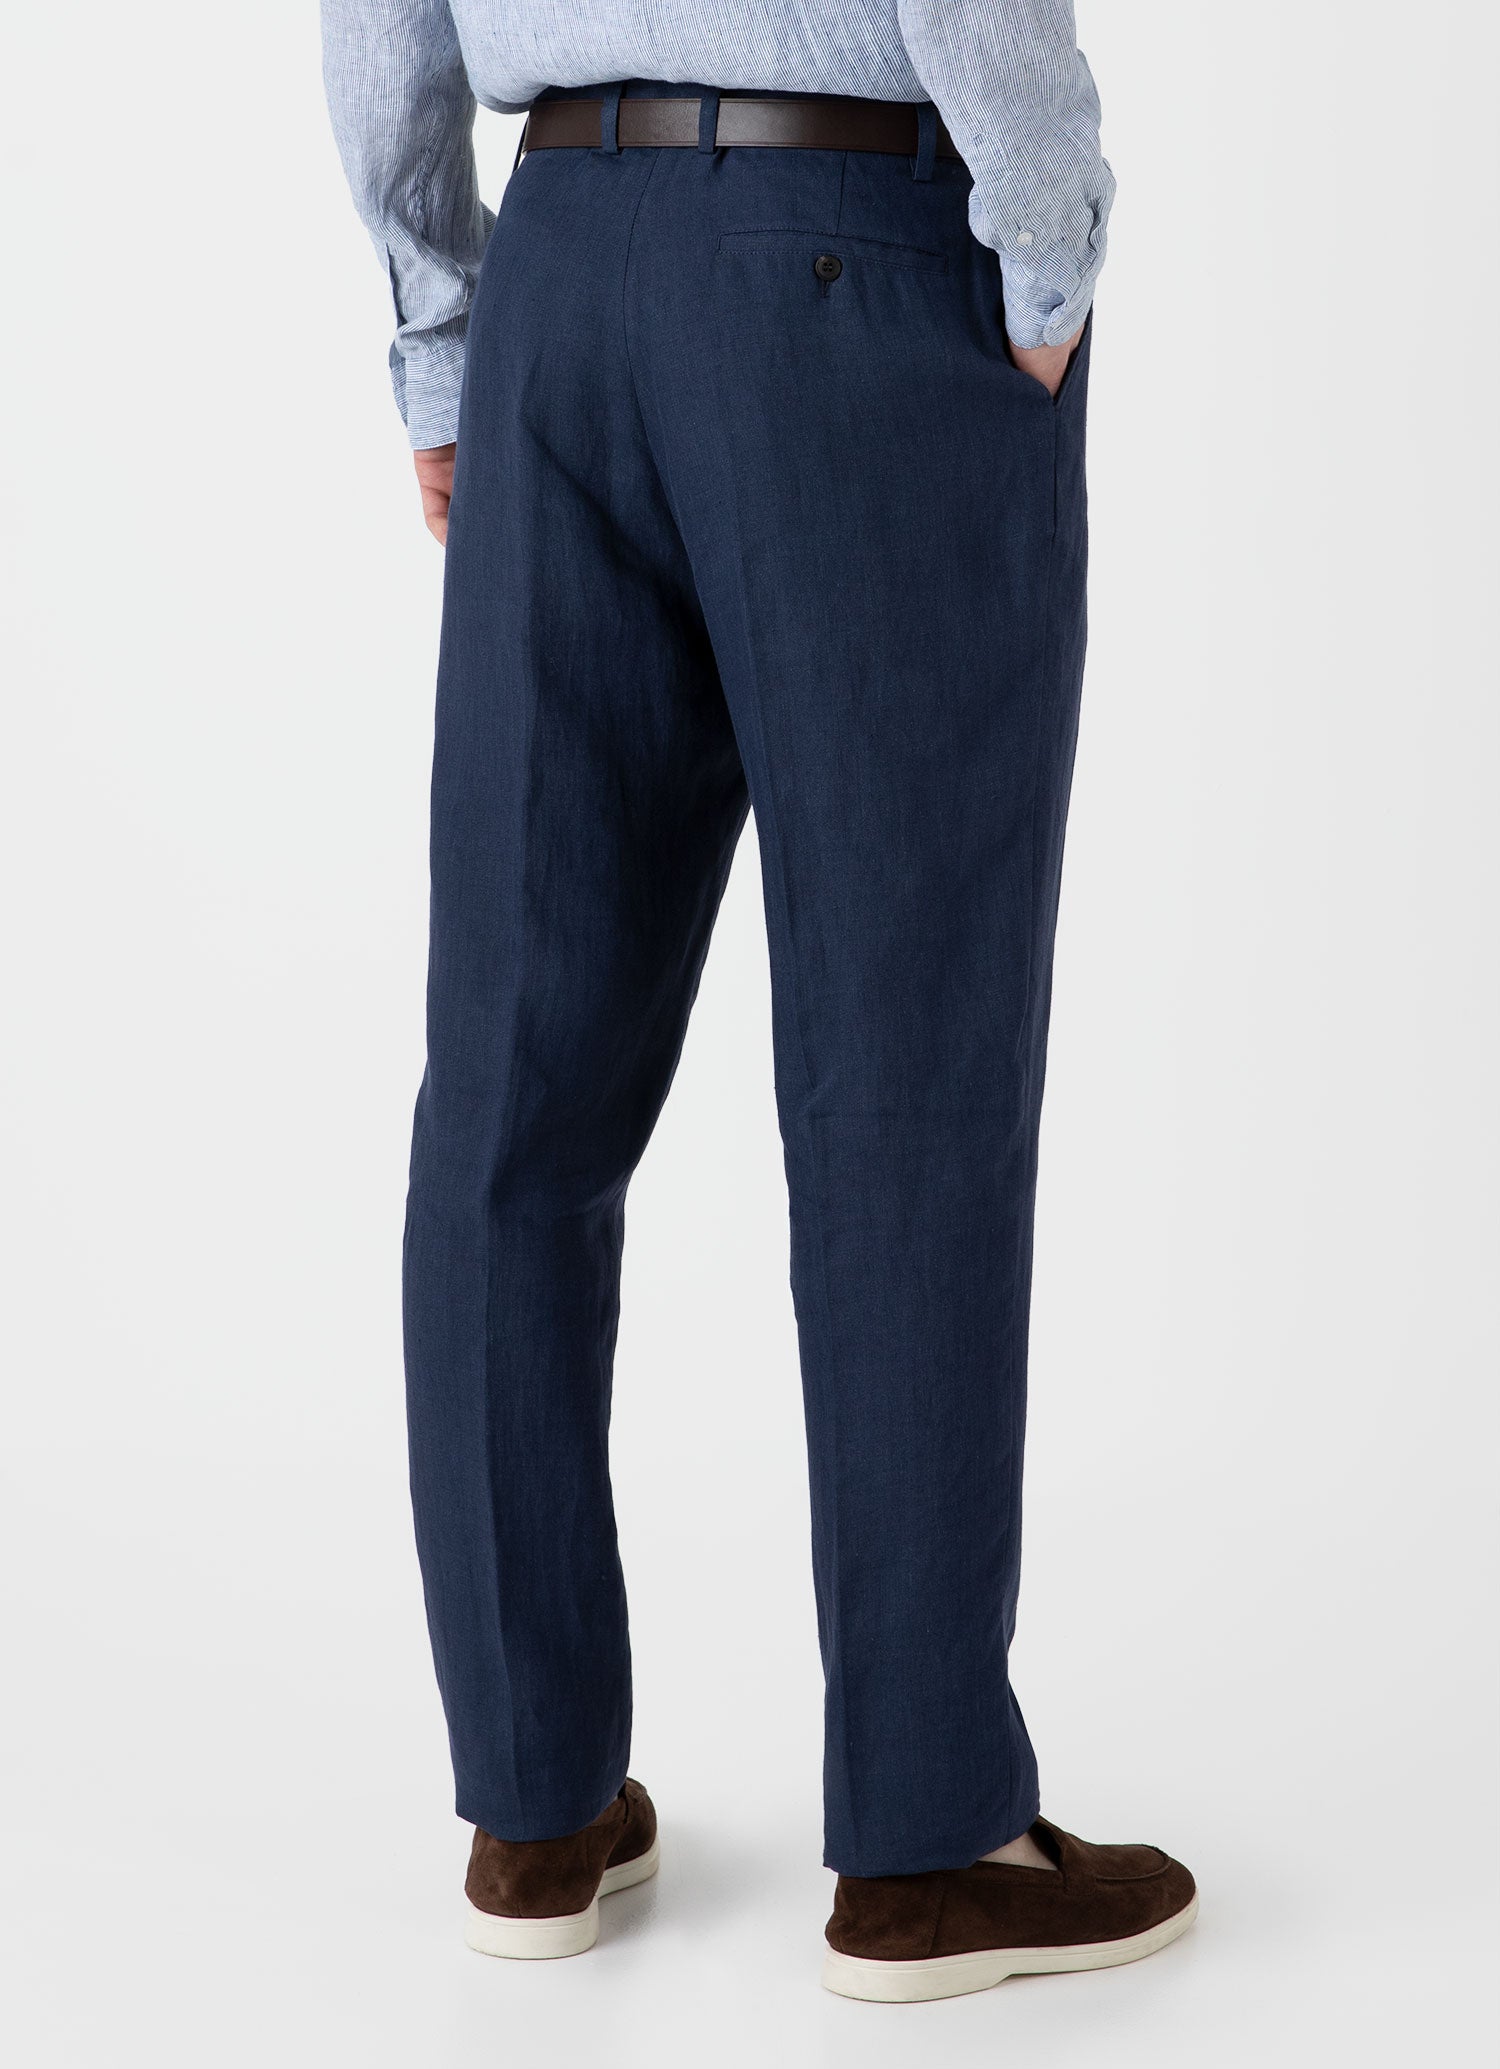 Resort business wear (light blue pants) | Best mens fashion, Mens outfits,  Mens fashion simple